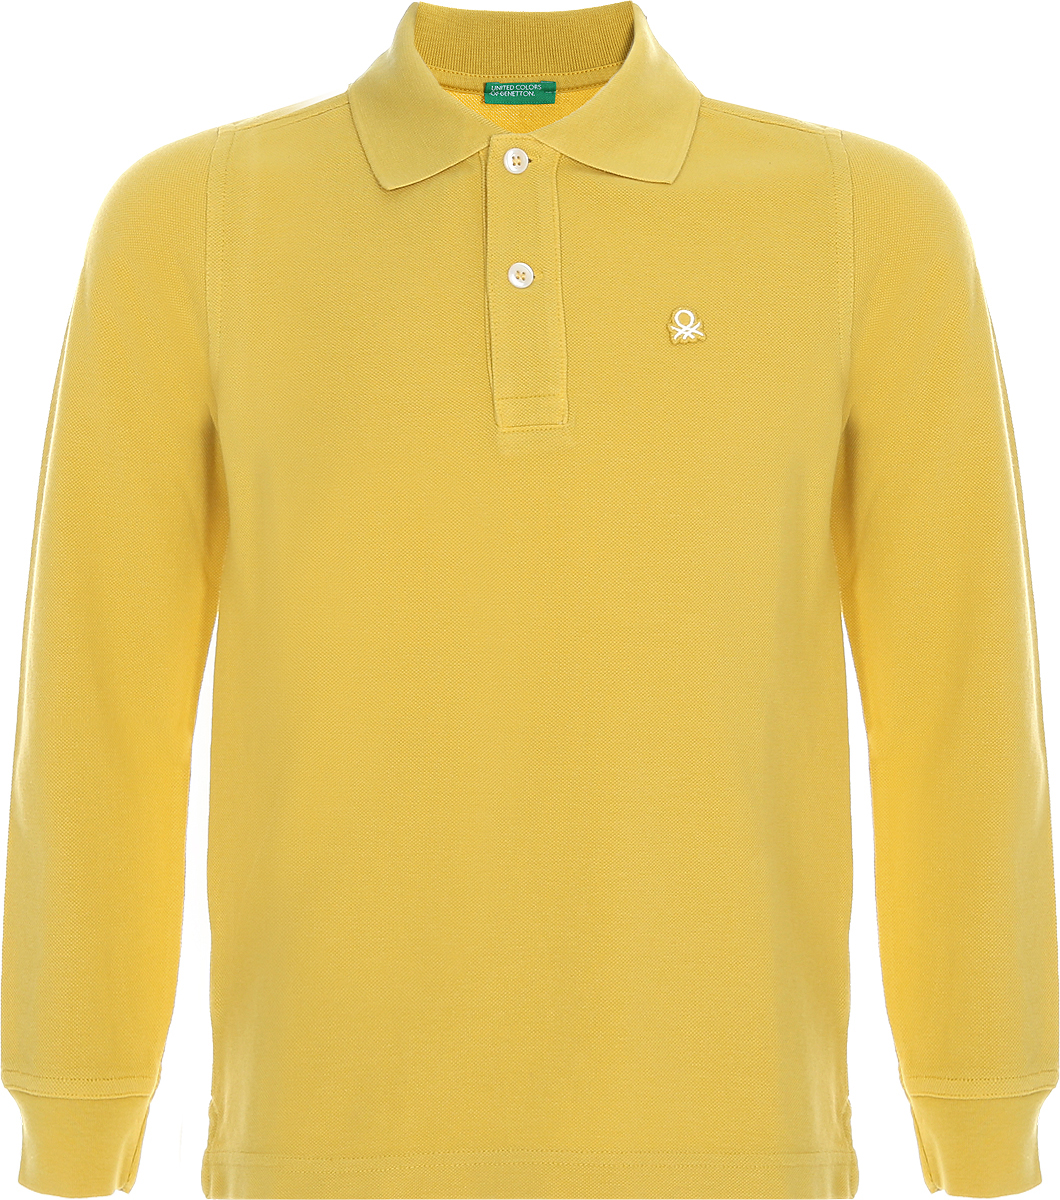 Кофта для мальчика United Colors of Benetton, цвет: желтый. 3089C3090_36H. Размер 100